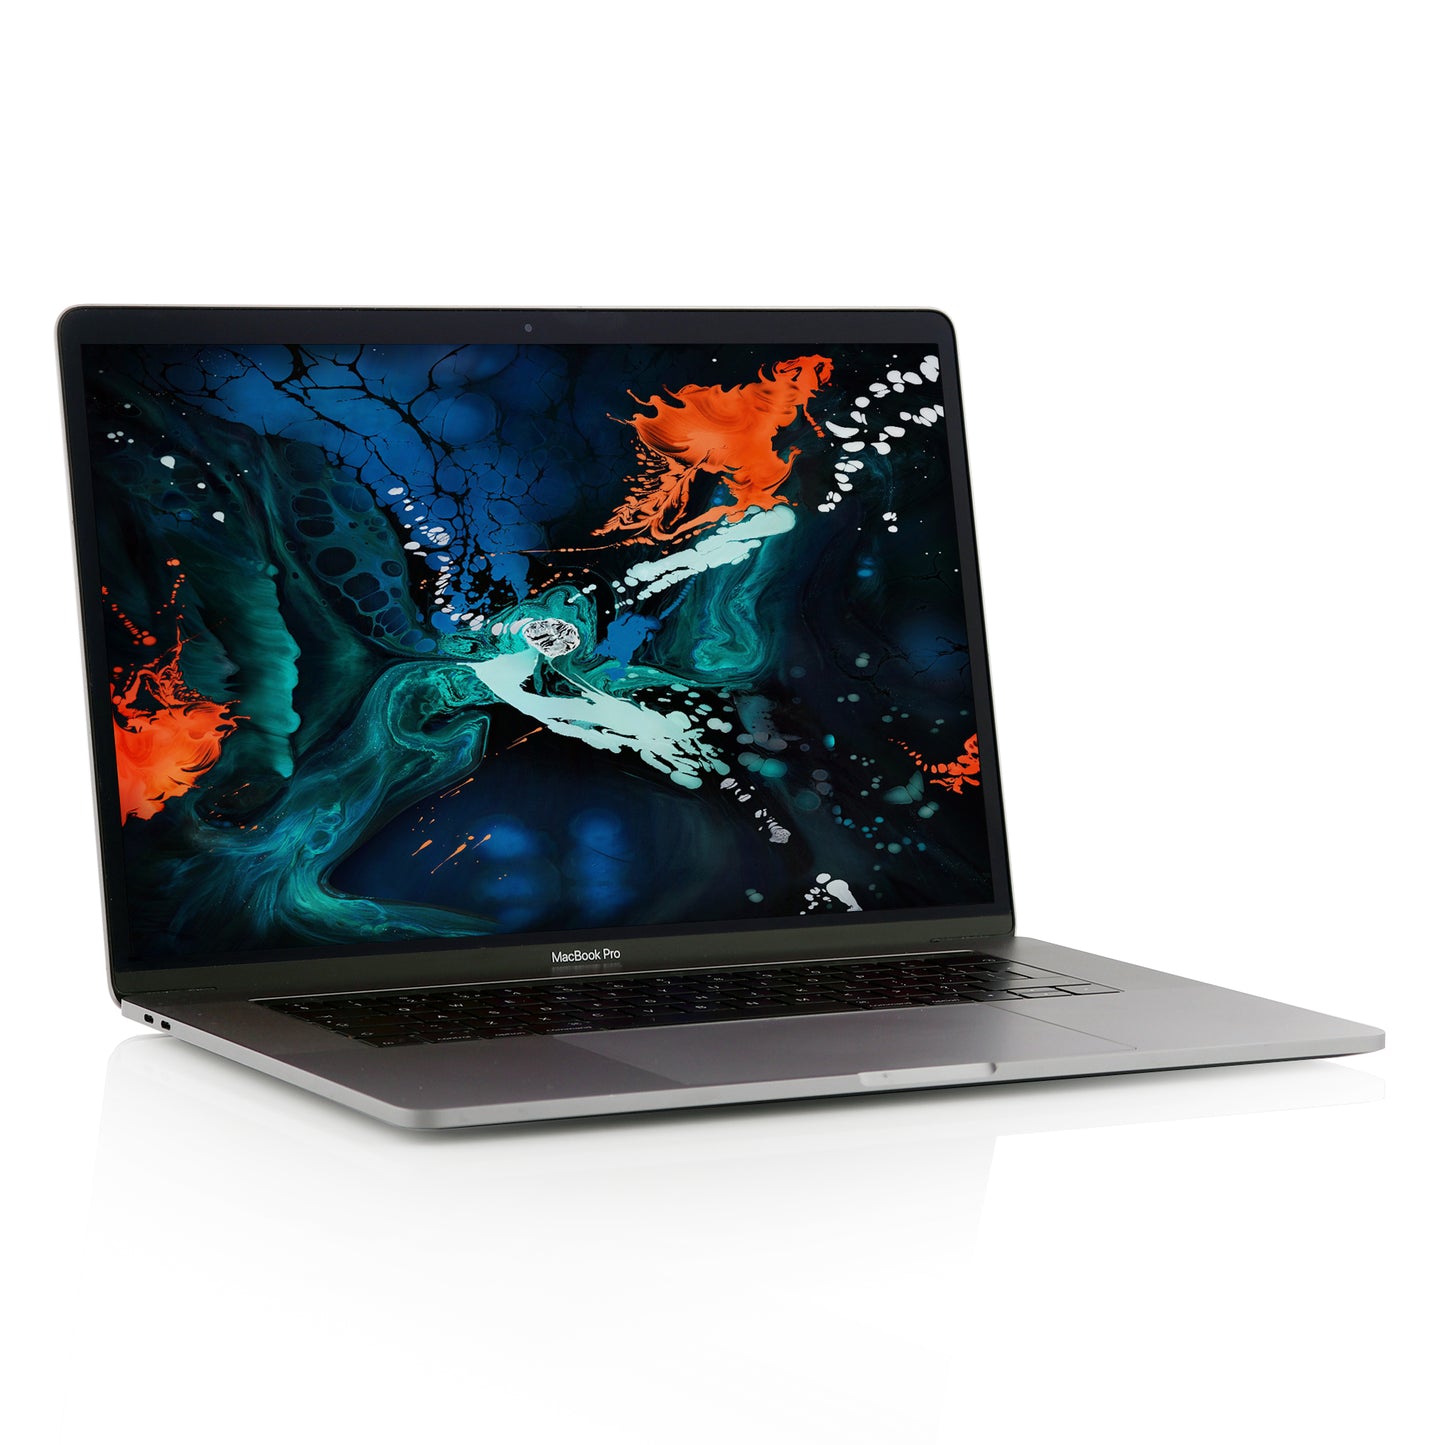 2018 Apple MacBook Pro 15-inch Intel i7 2.2 GHz 6-core 16GB 256GB - Space Grey